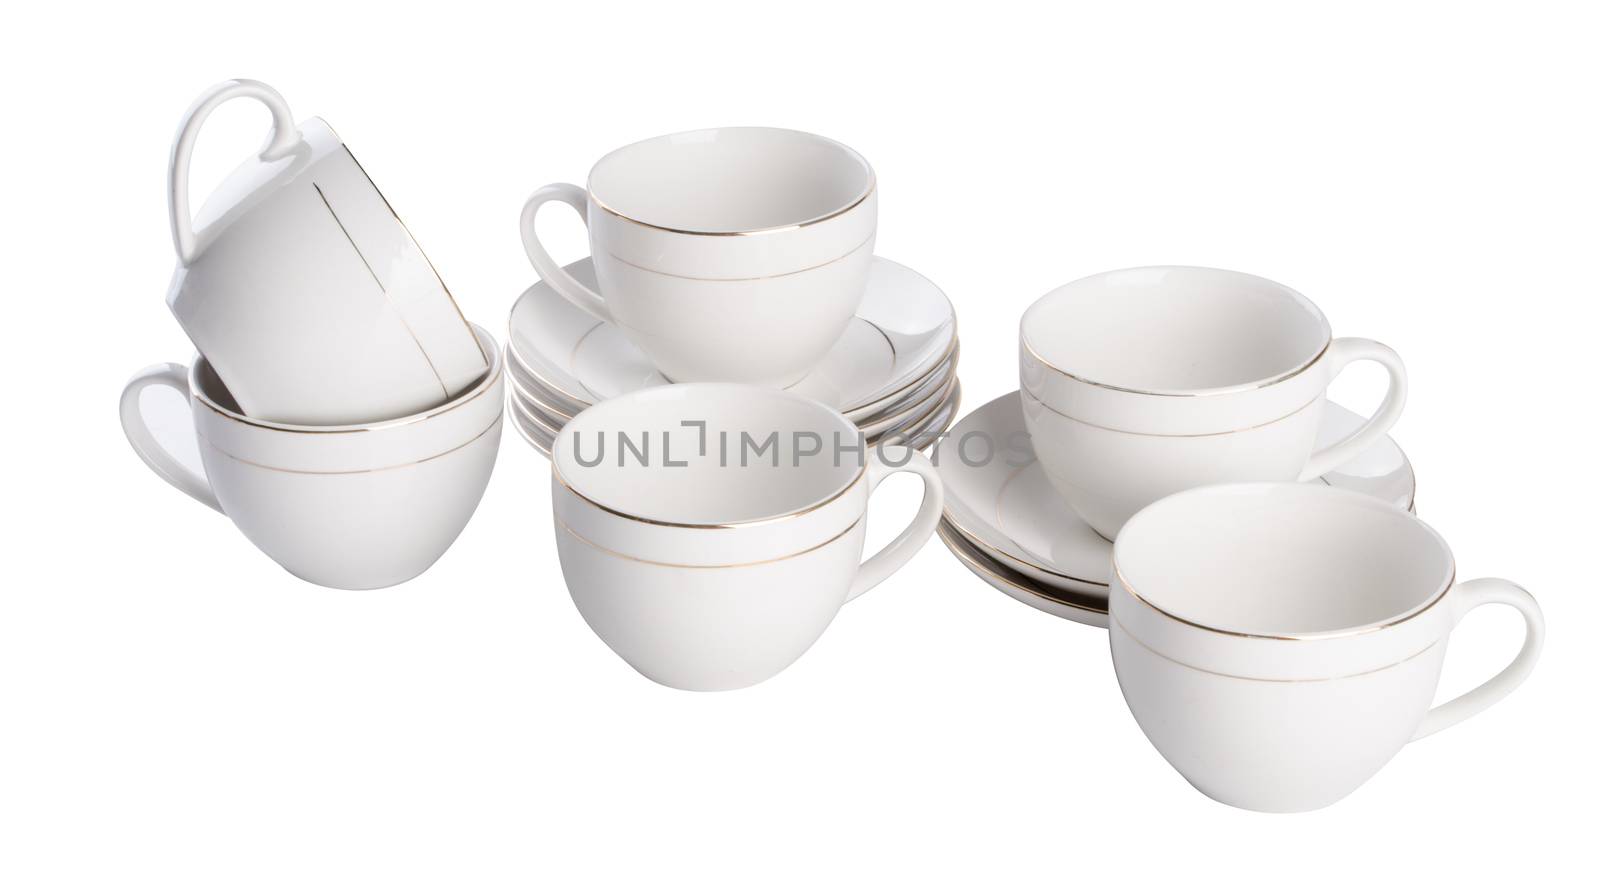 teacup. teacup set on a background. teacup. teacup set on a background